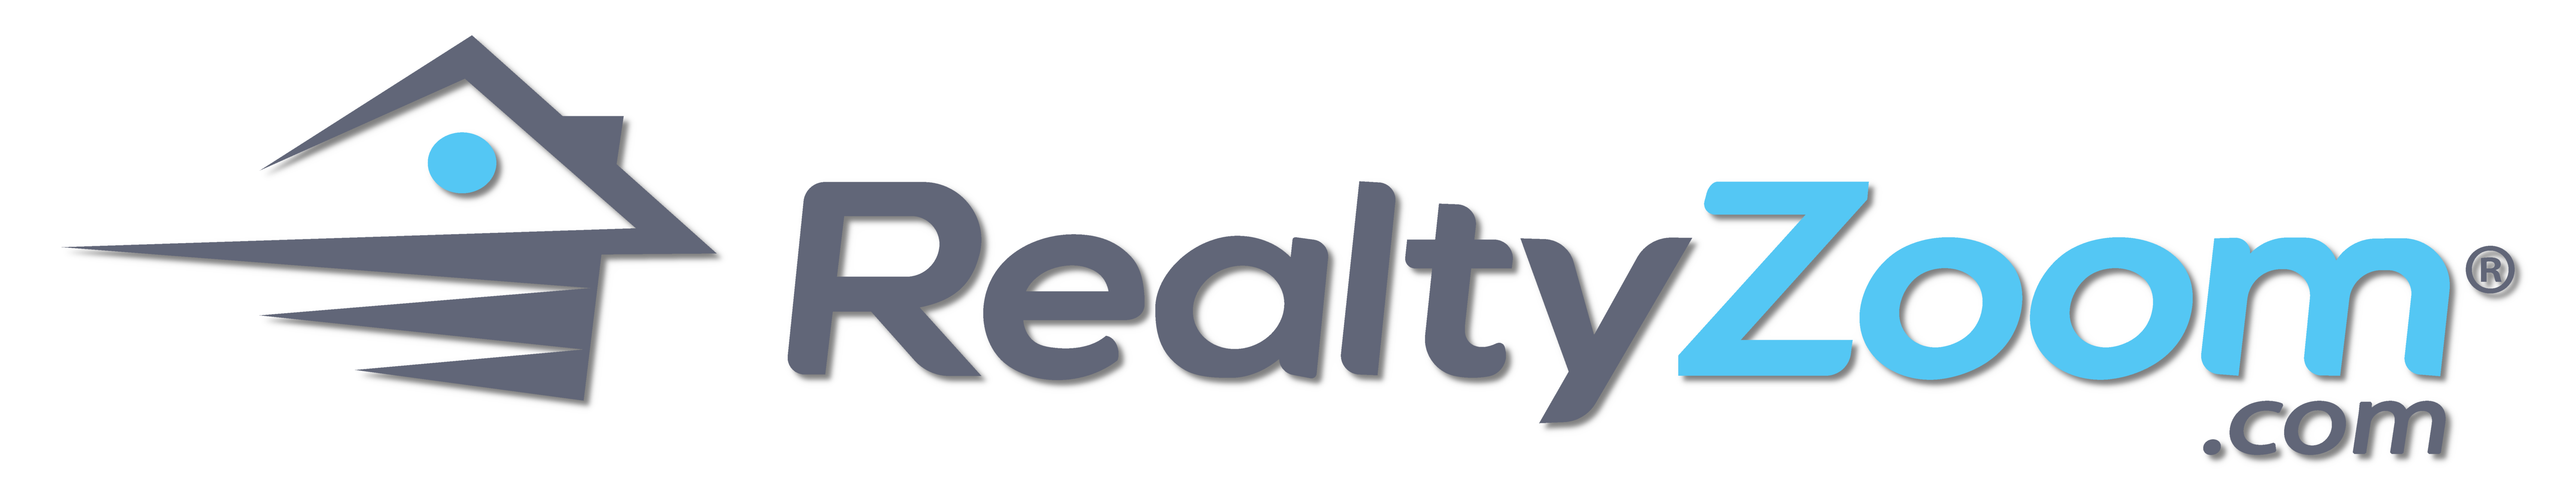 RealtyZoom logo